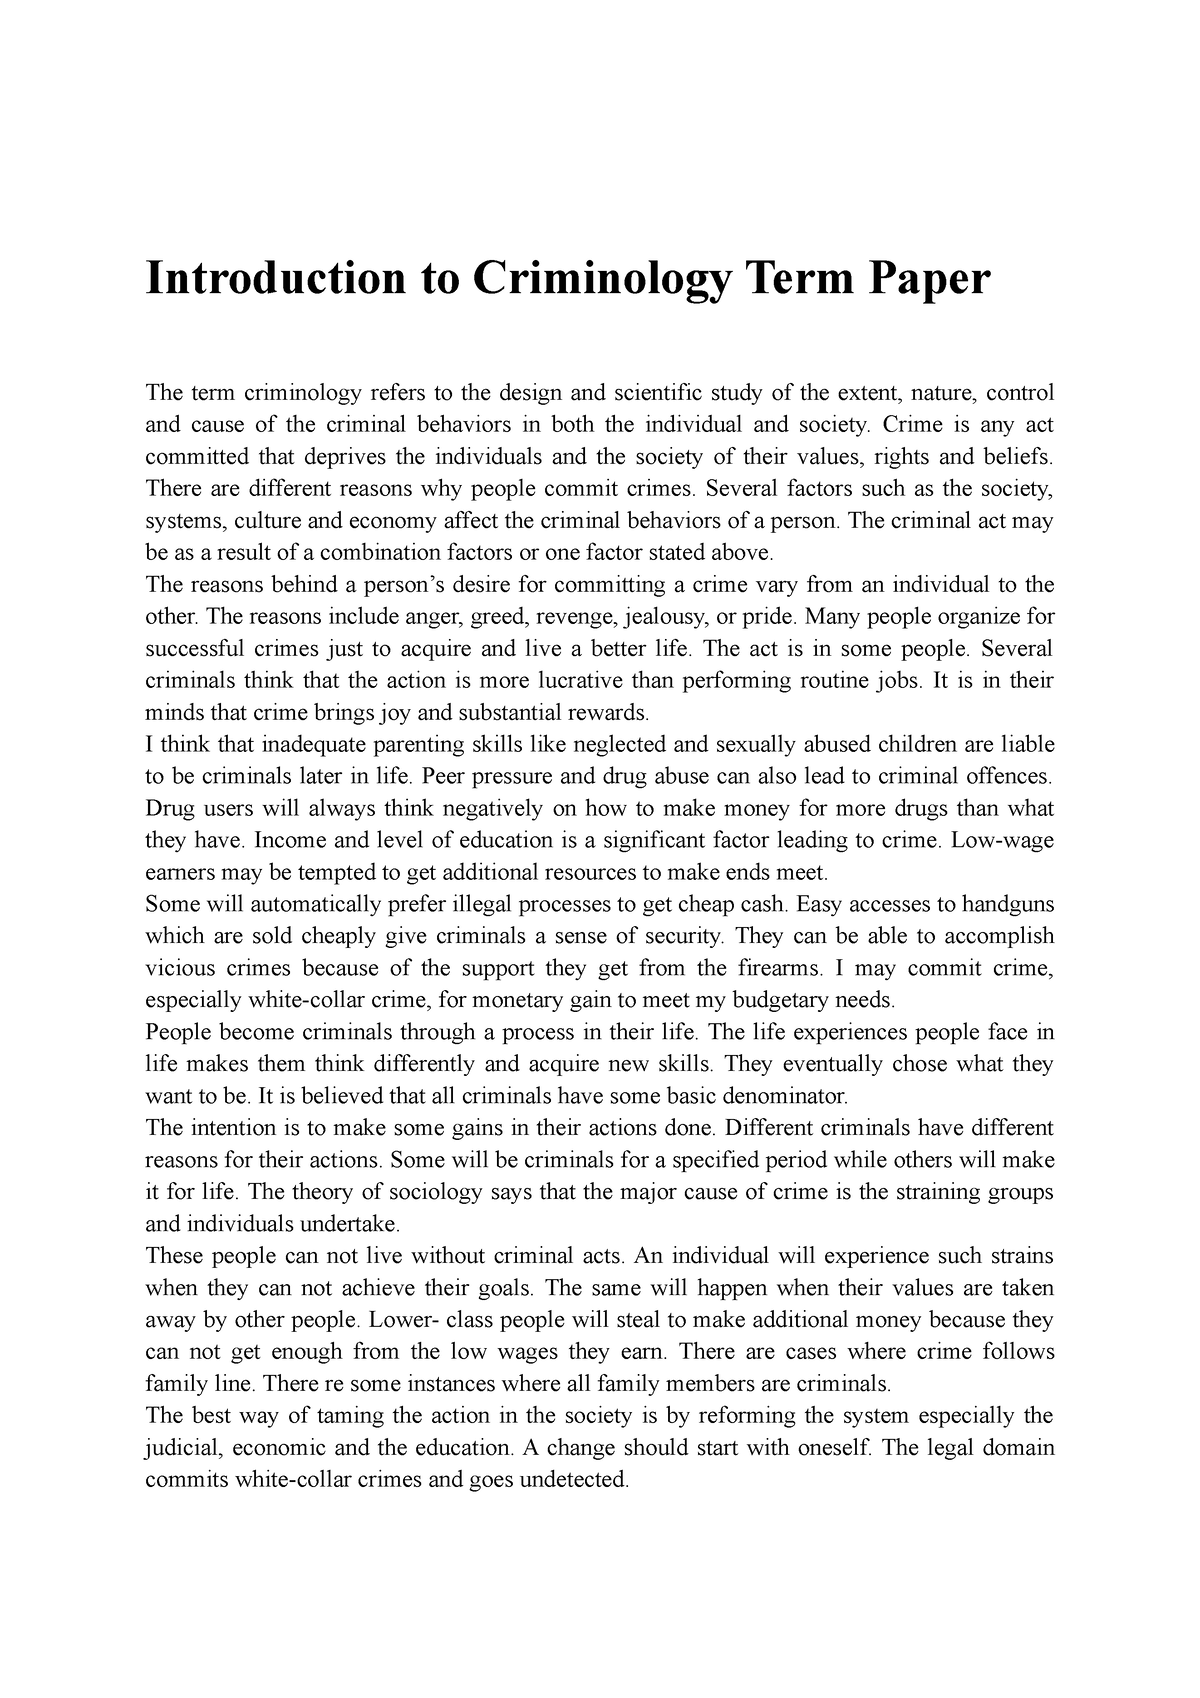 importance of studying criminology essay